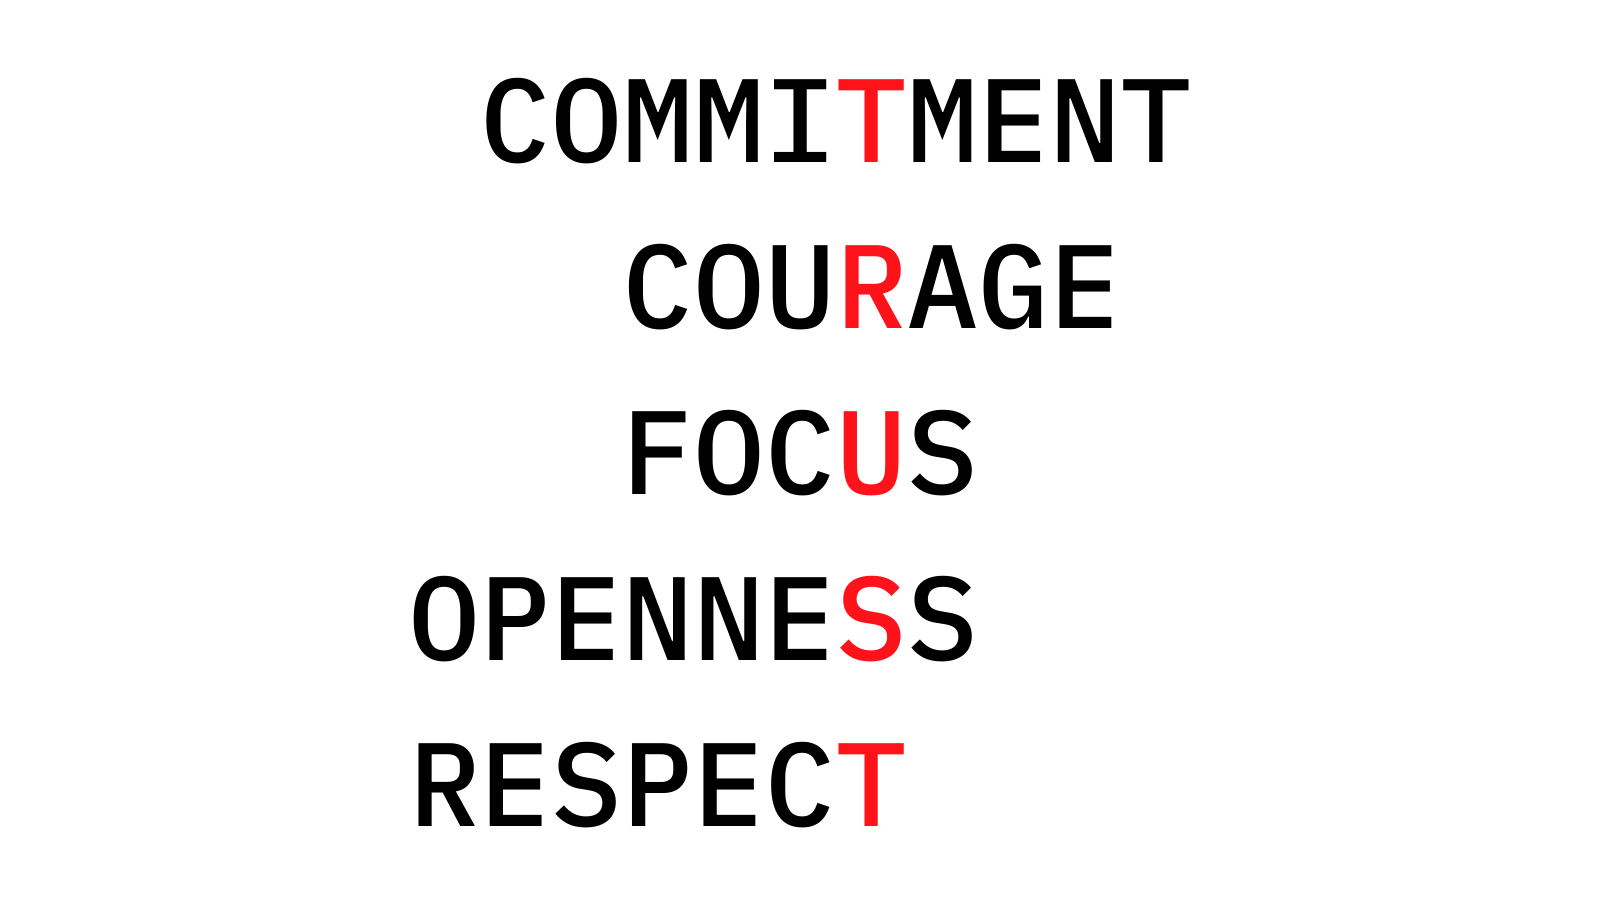 You can find TRUST hidden in the Scrum values.